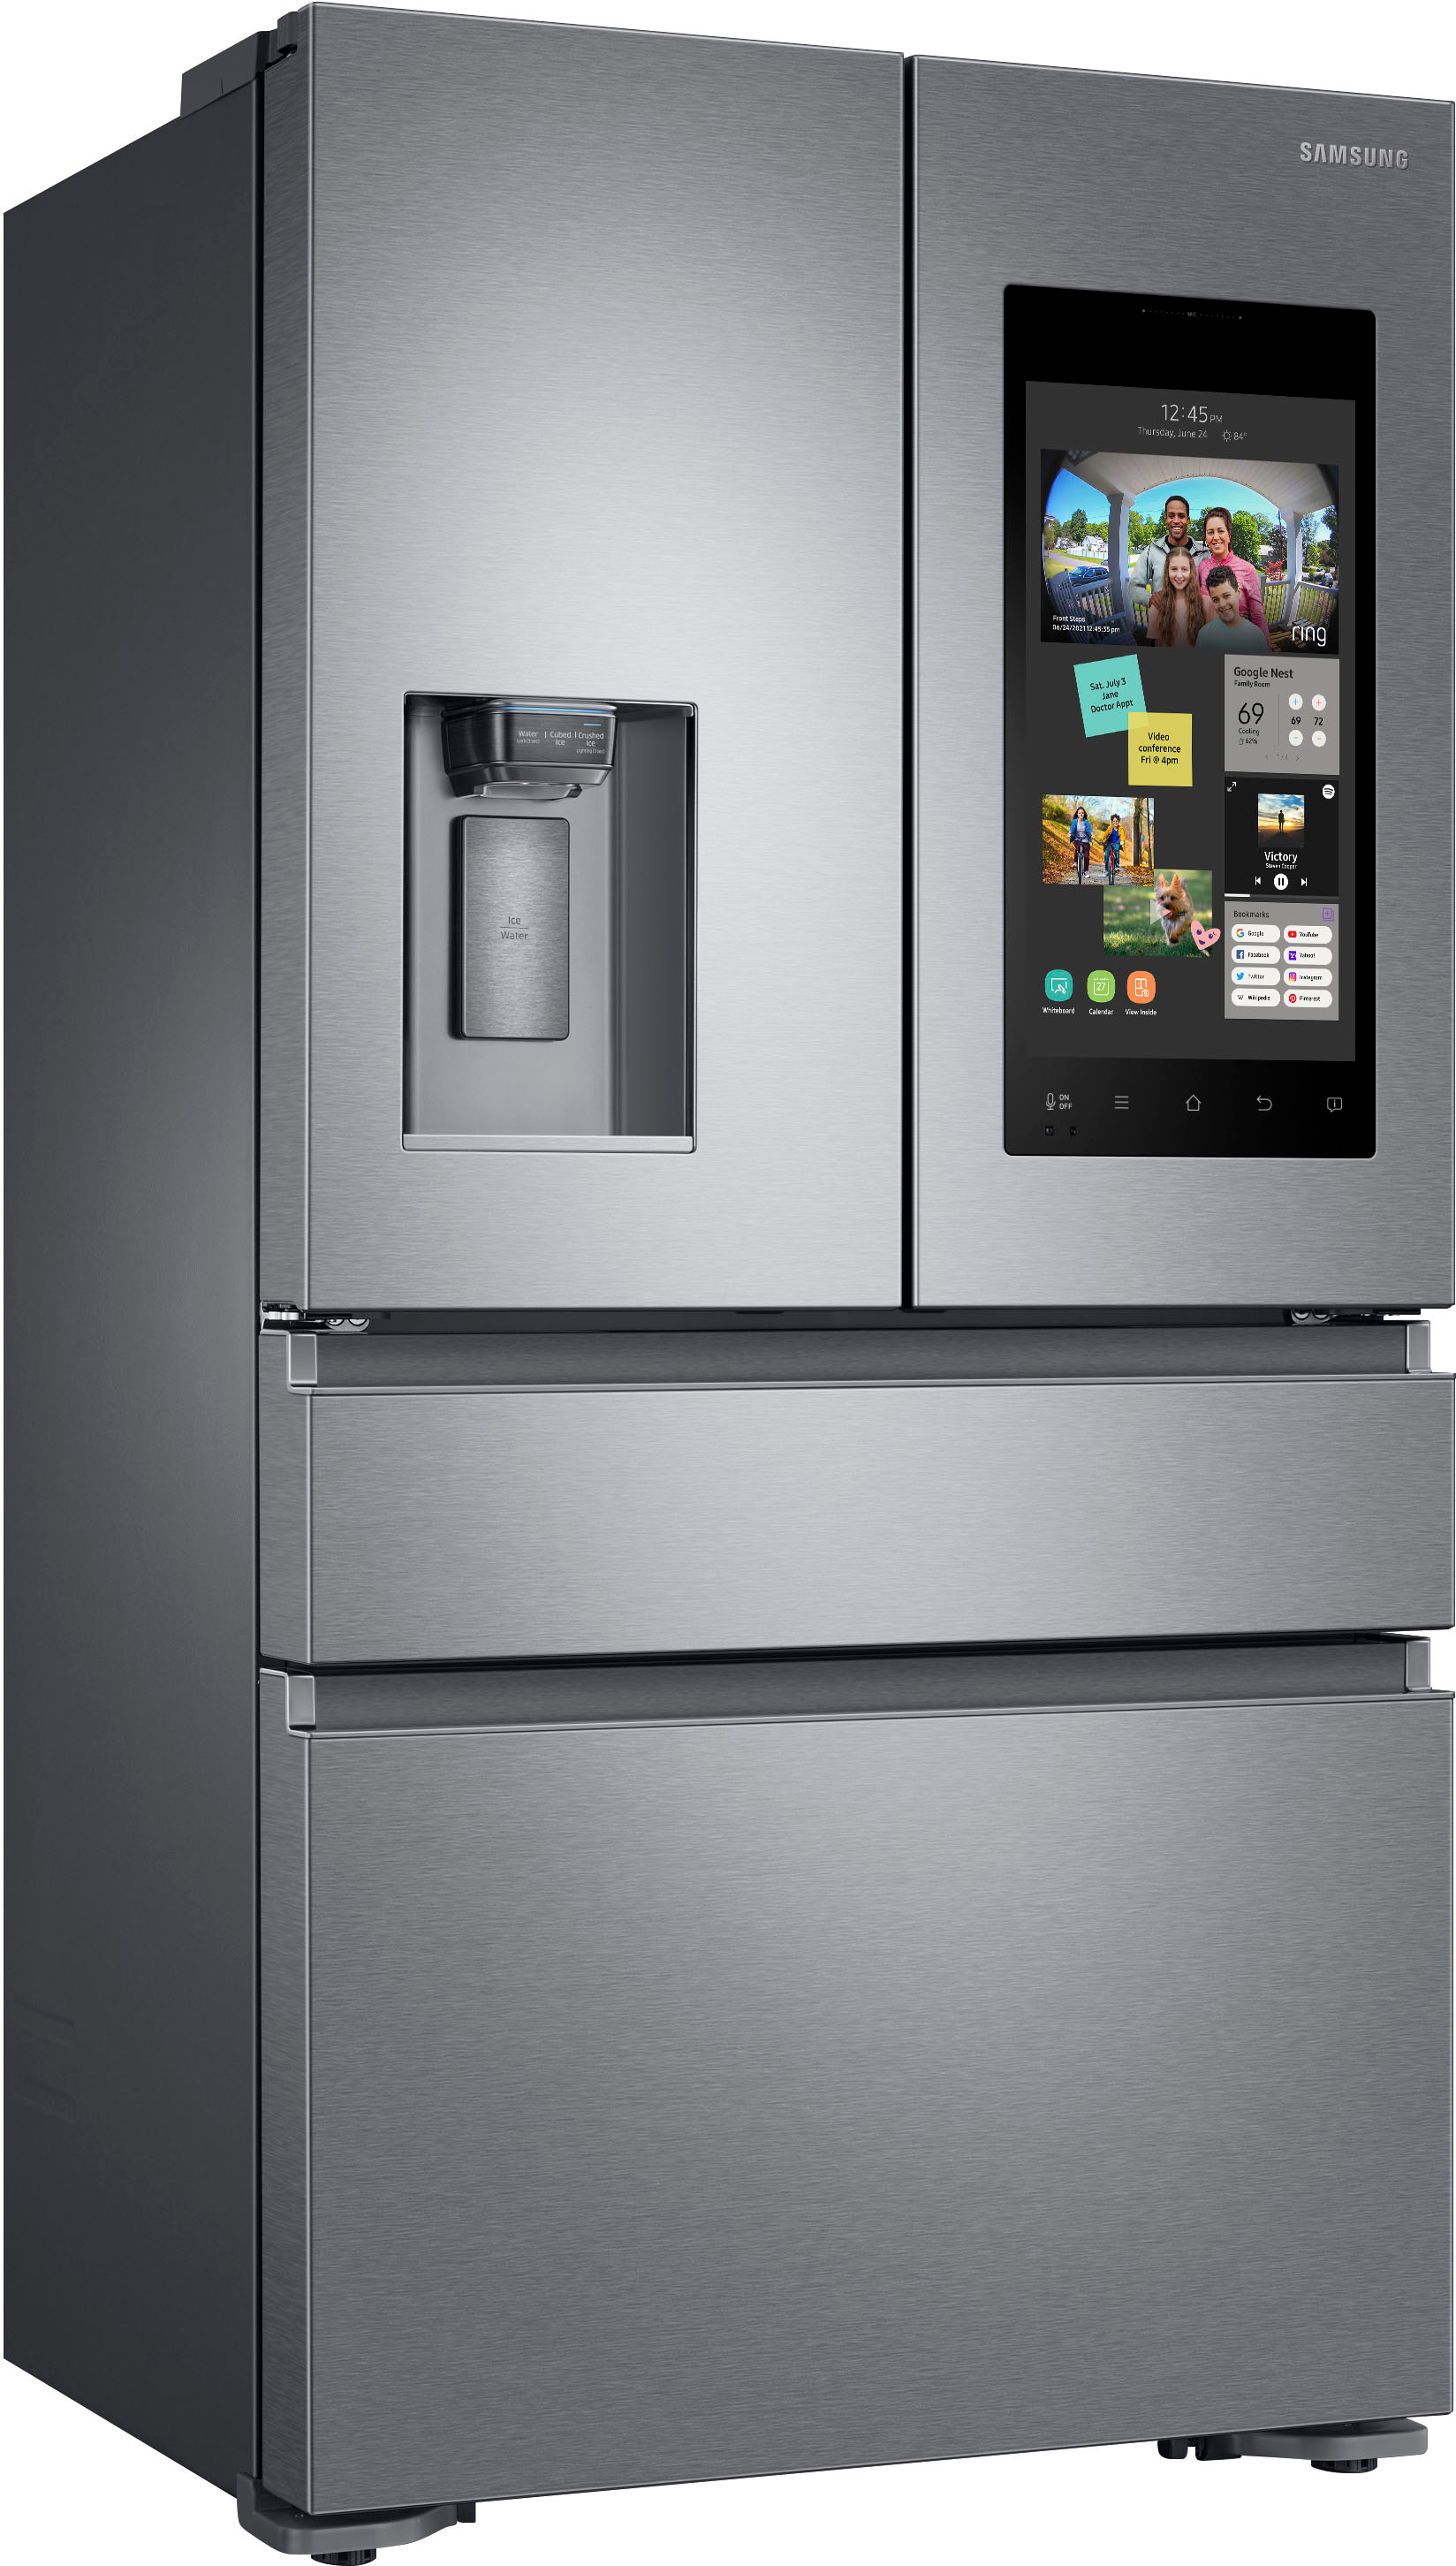 Angle View: Samsung - Family Hub 22.2 Cu. Ft. Counter Depth 4-Door French Door Fingerprint Resistant Refrigerator - Stainless steel